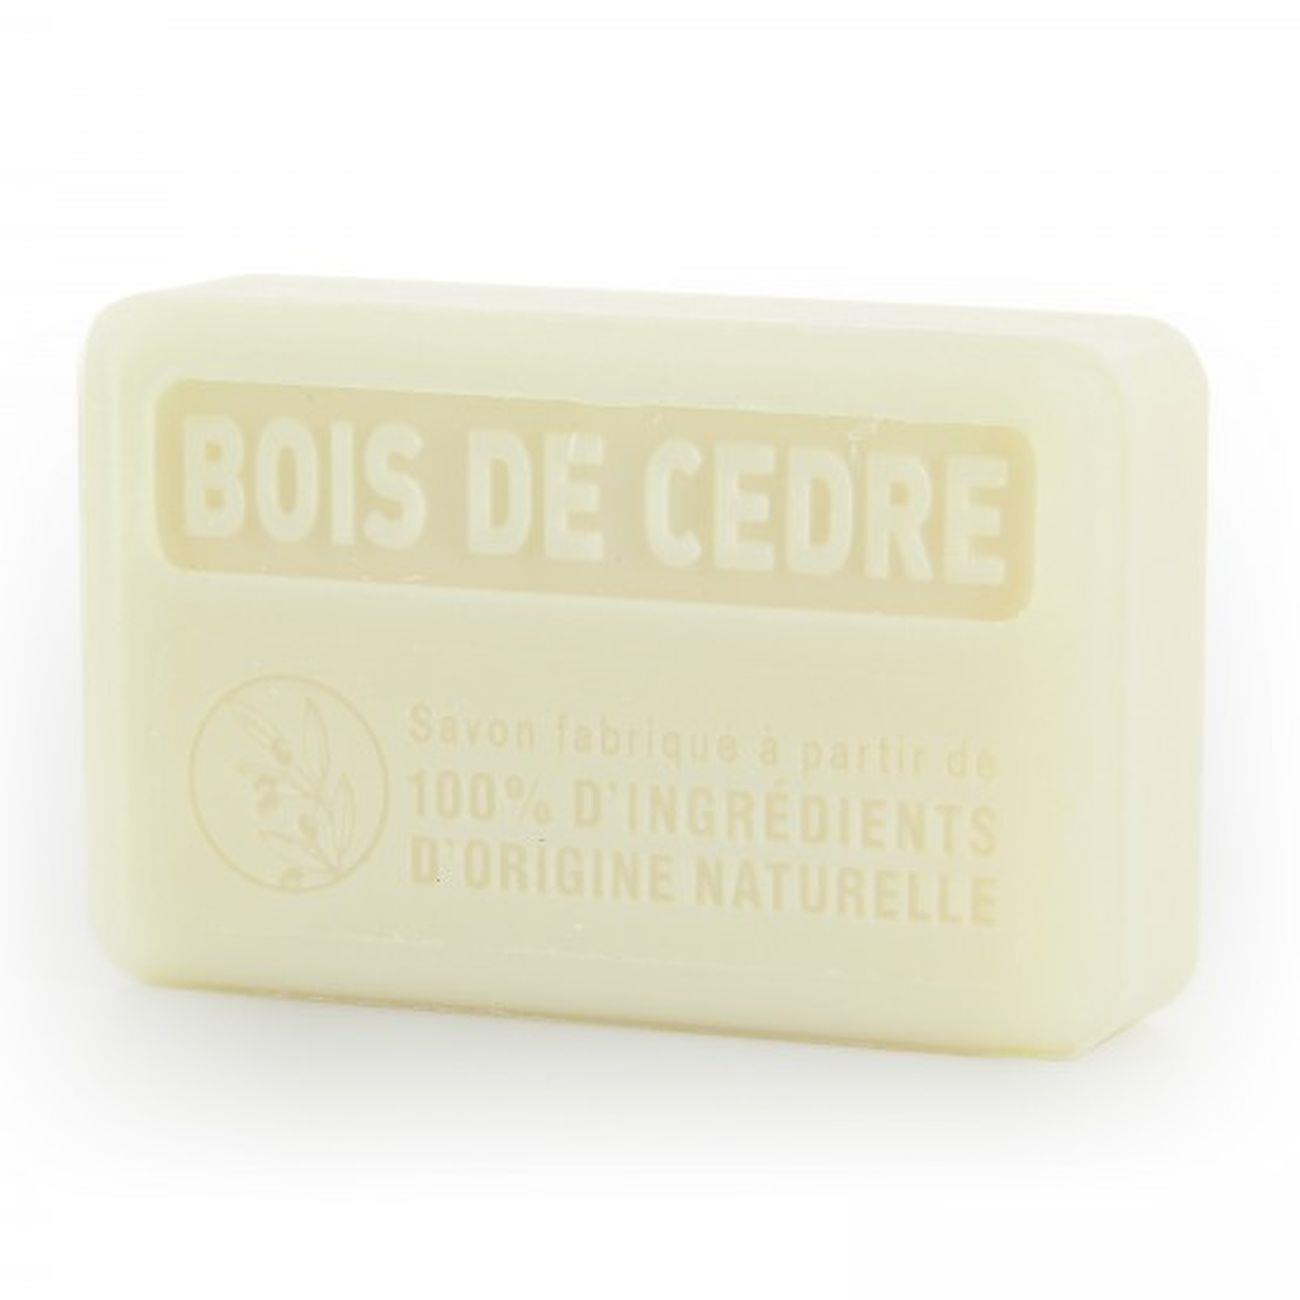 Marseille Soap 100% Natural Bois de Cedre (Cedar Wood) 125g